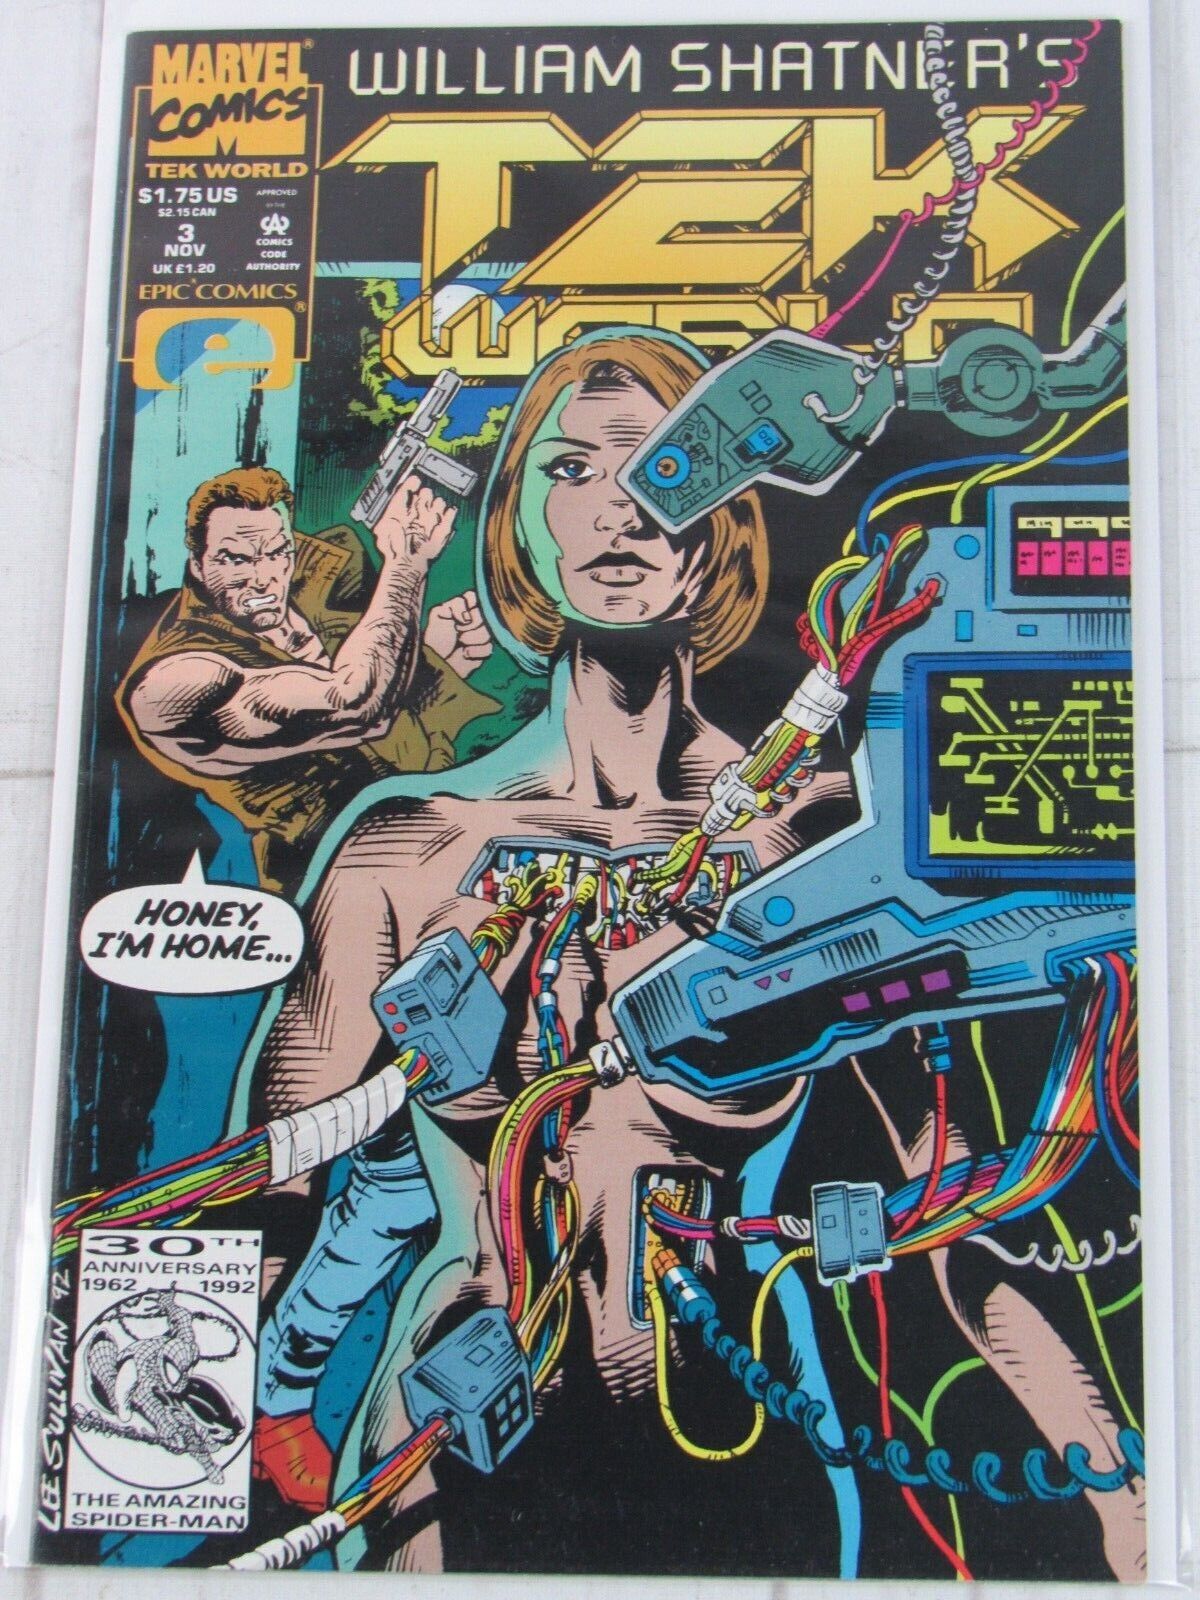 Tek World #3 Nov. 1992 Epic Comics